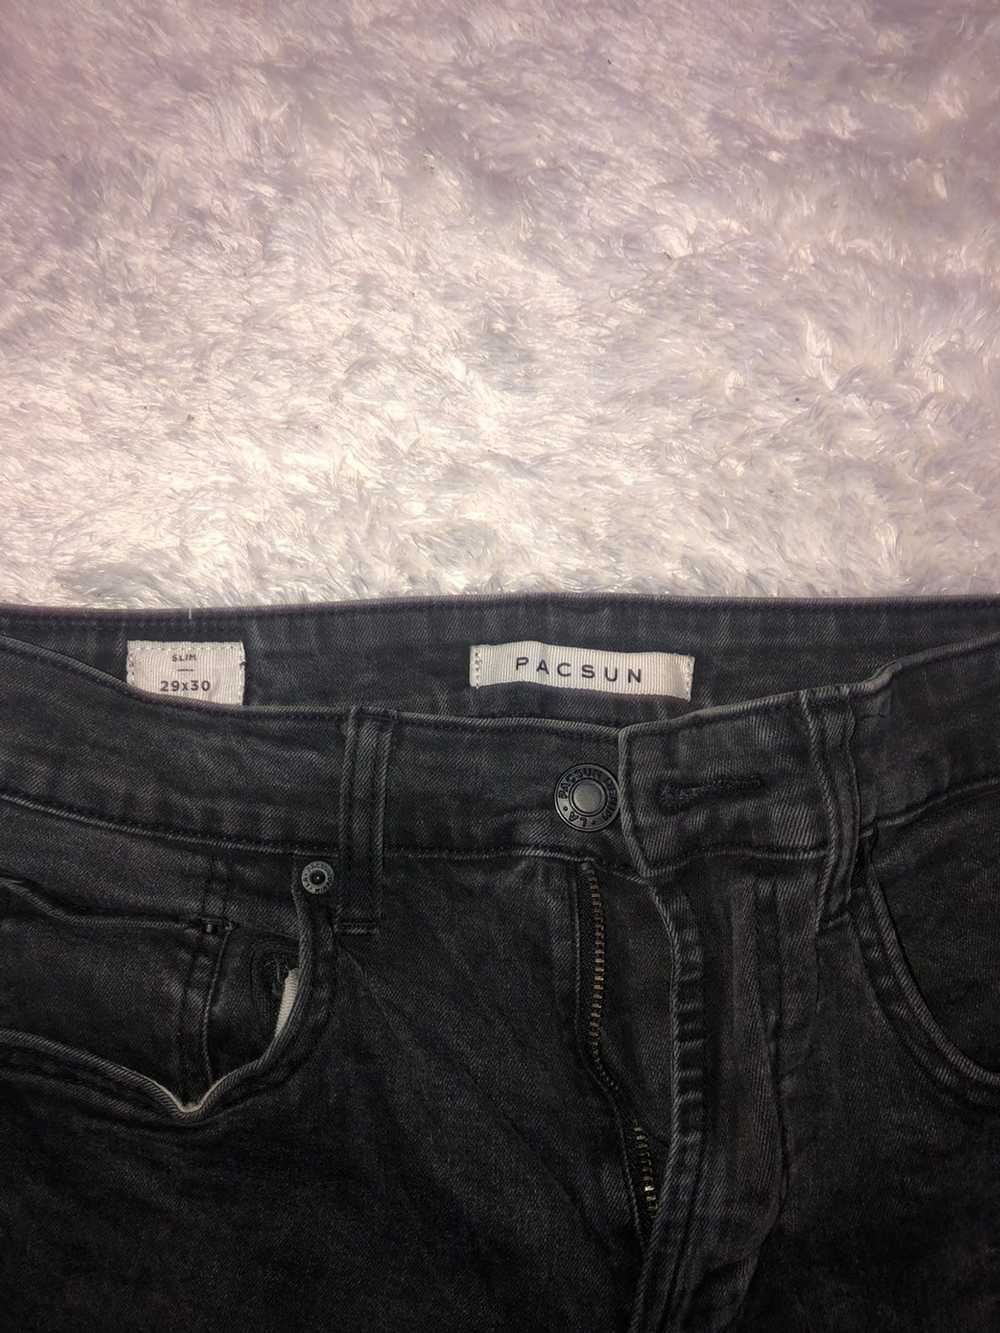 Pacsun Black Grayish Pacsun Jeans - image 2